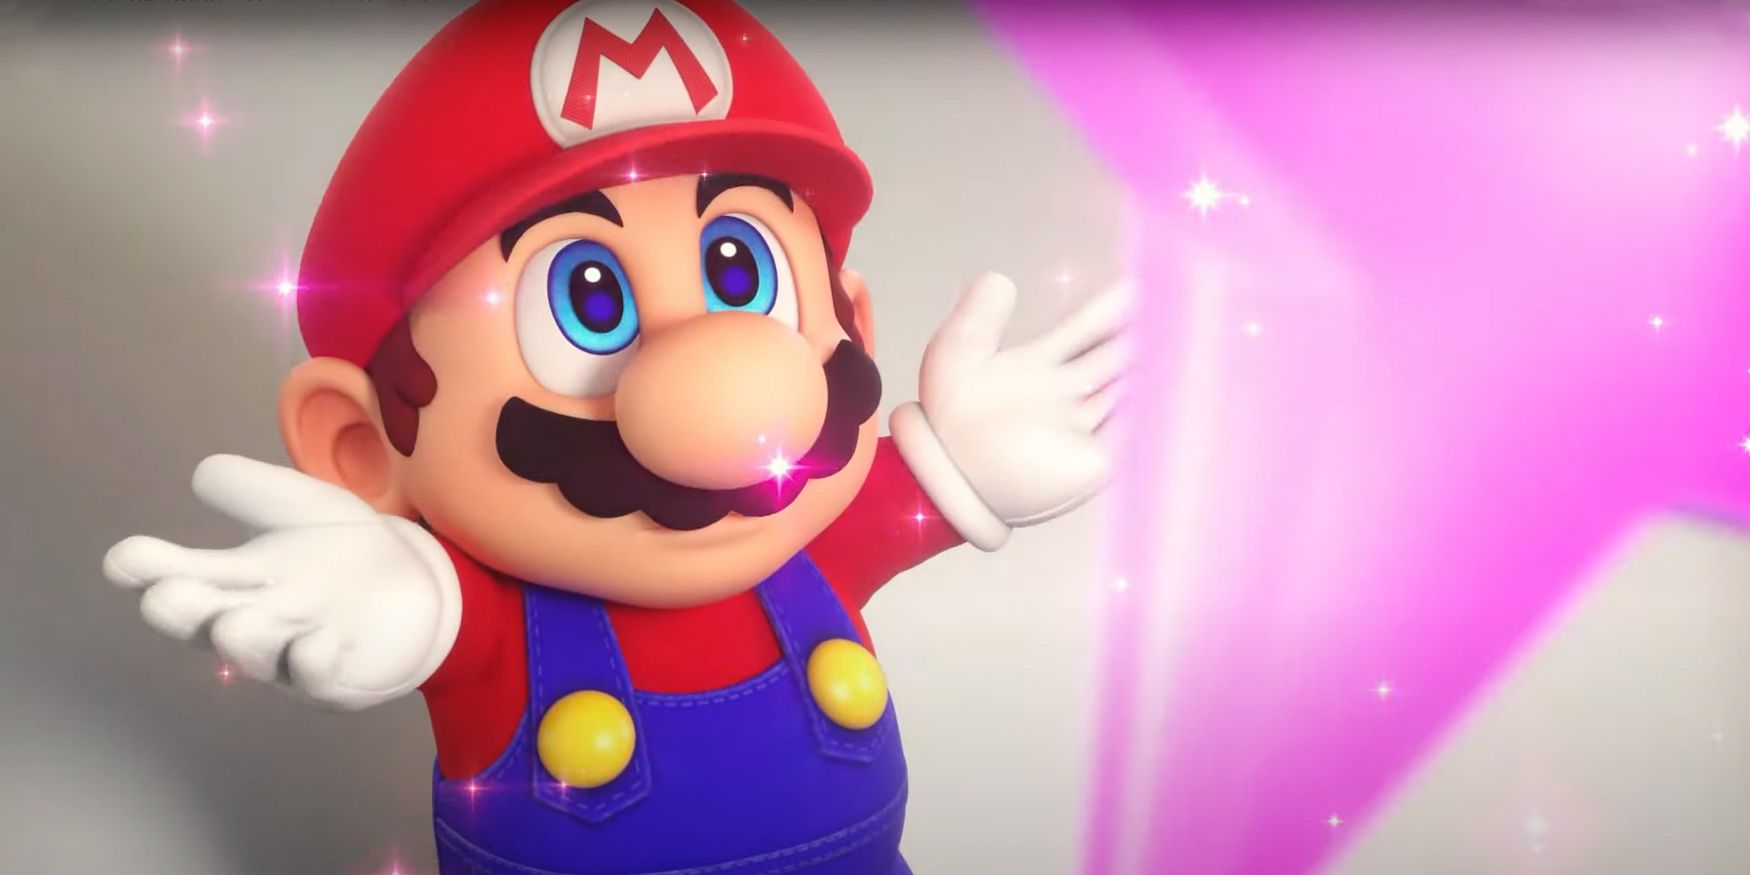 Super Mario RPG Remake Release Date, Gameplay Details, & Changes